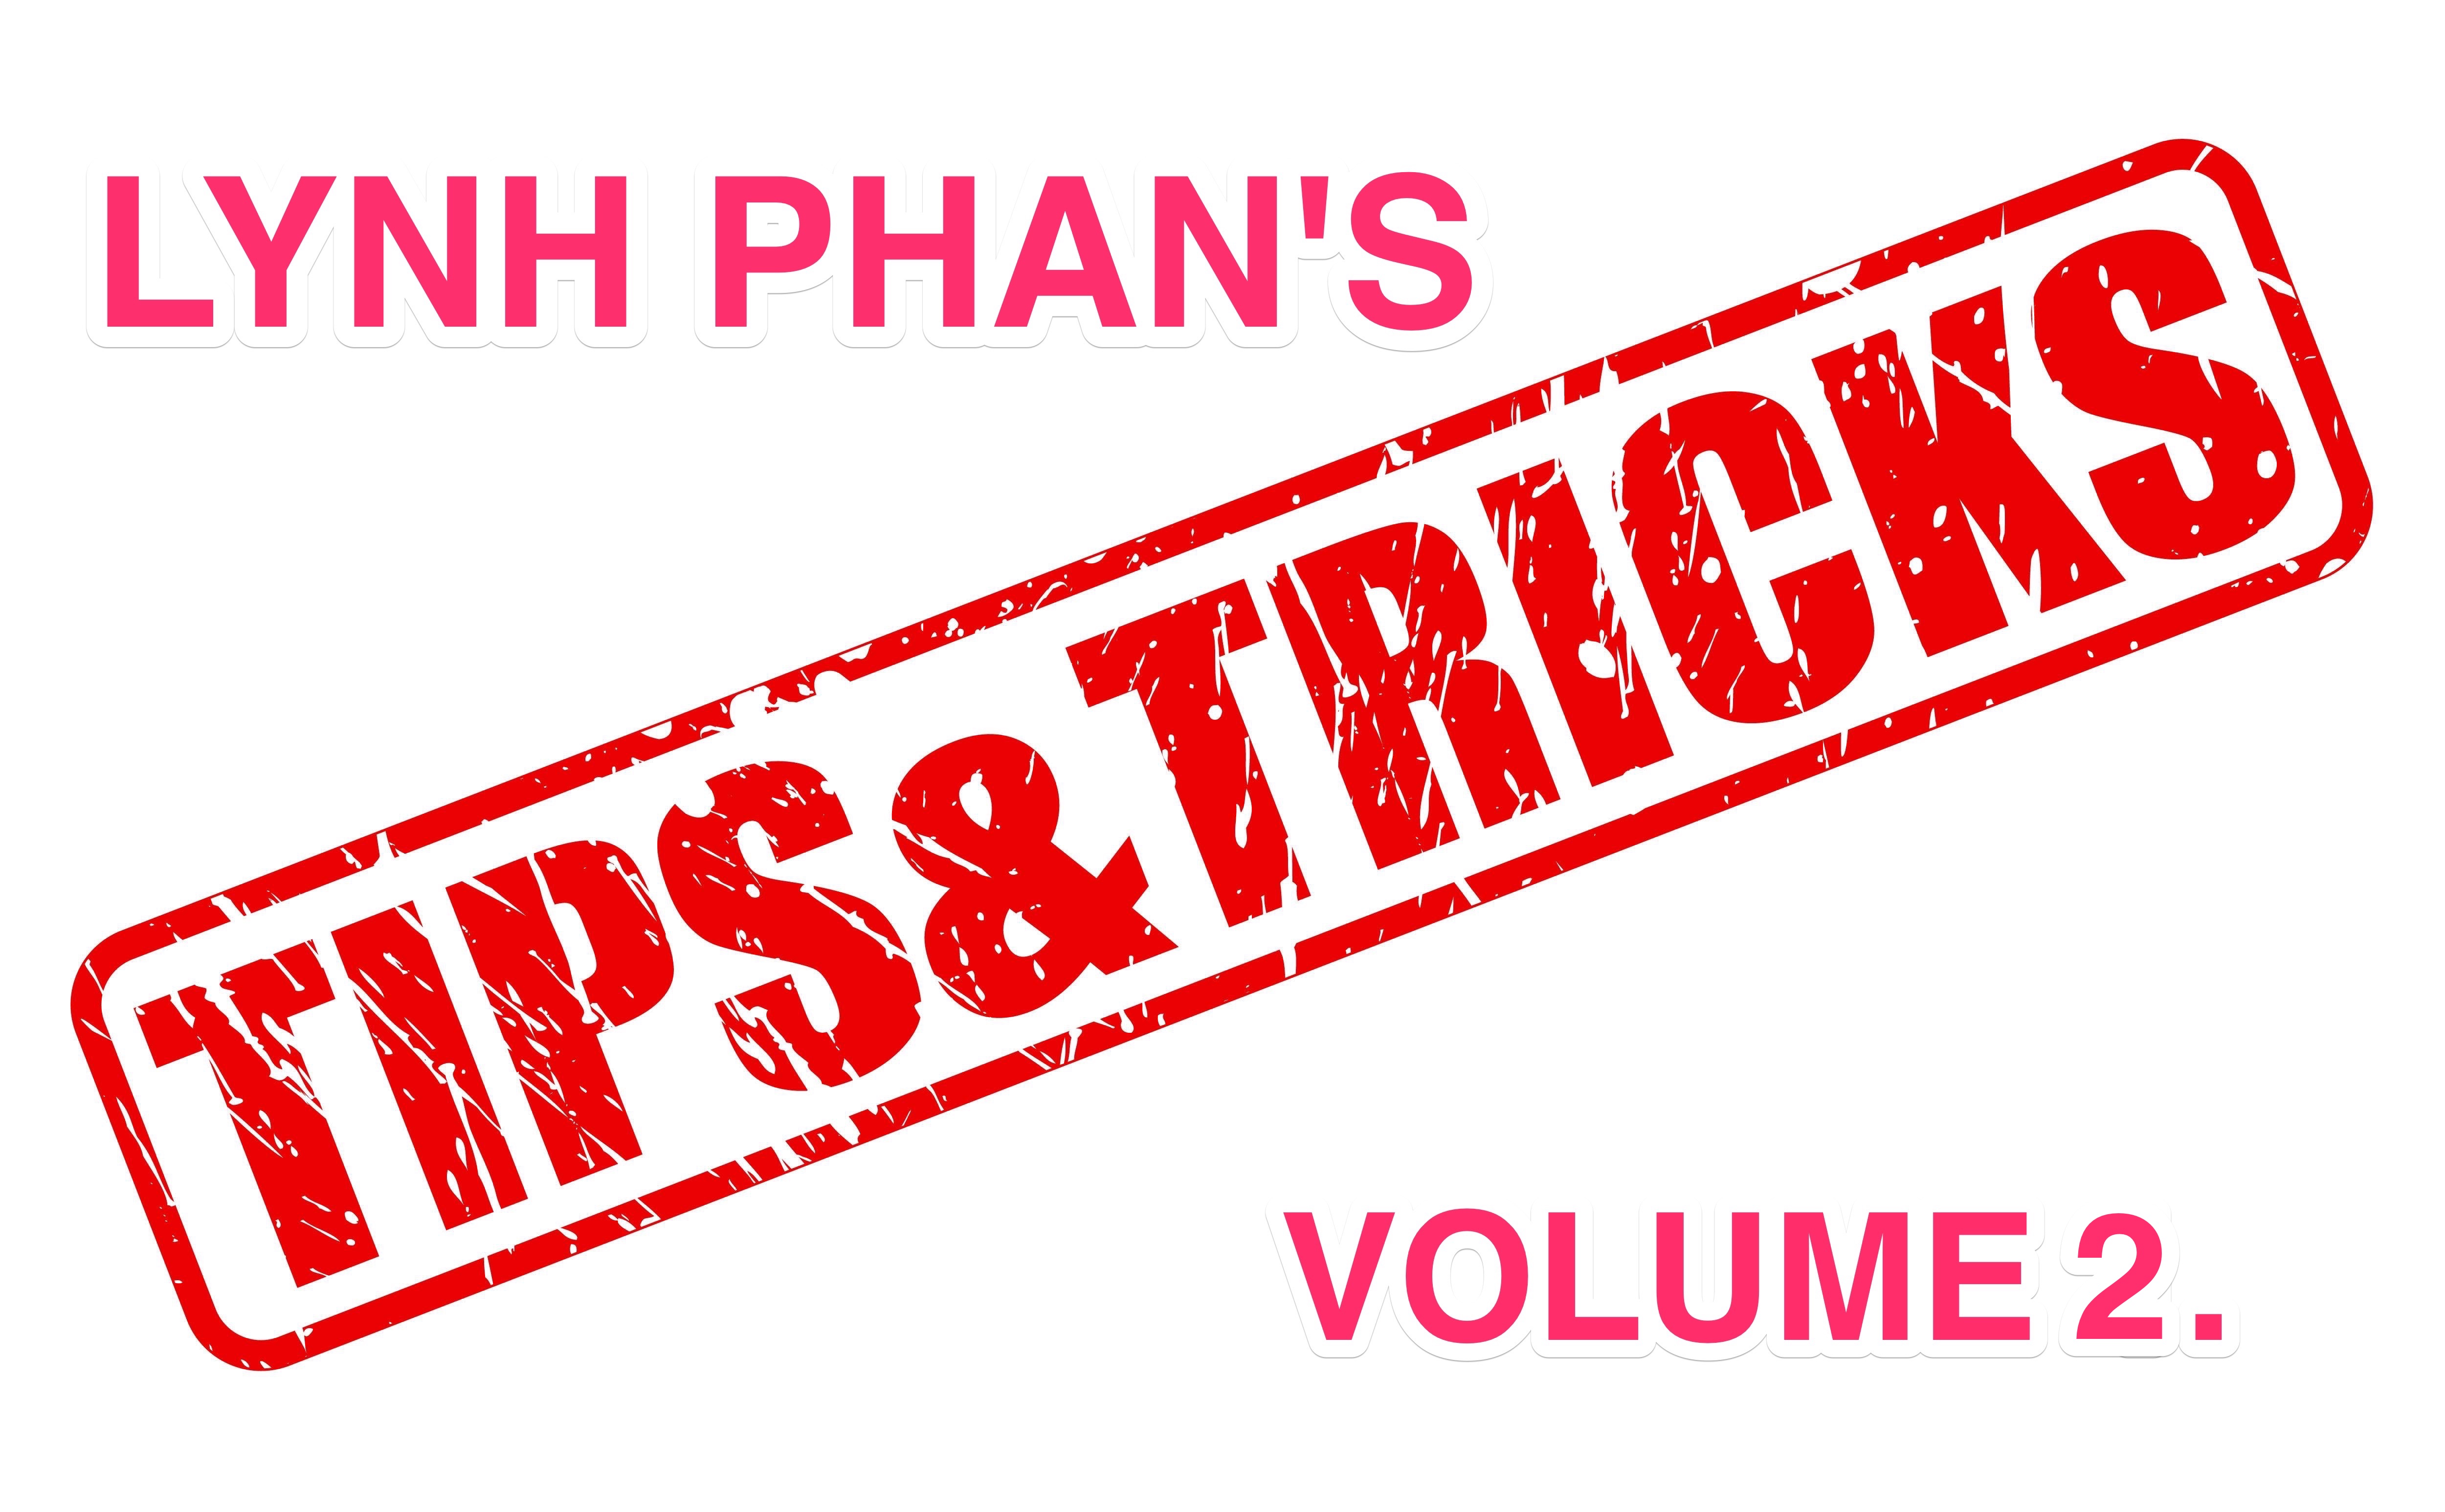 Lynh Phan's DJI Phantom 3 and Inspire 1 Tips Compilation Vol. 2.